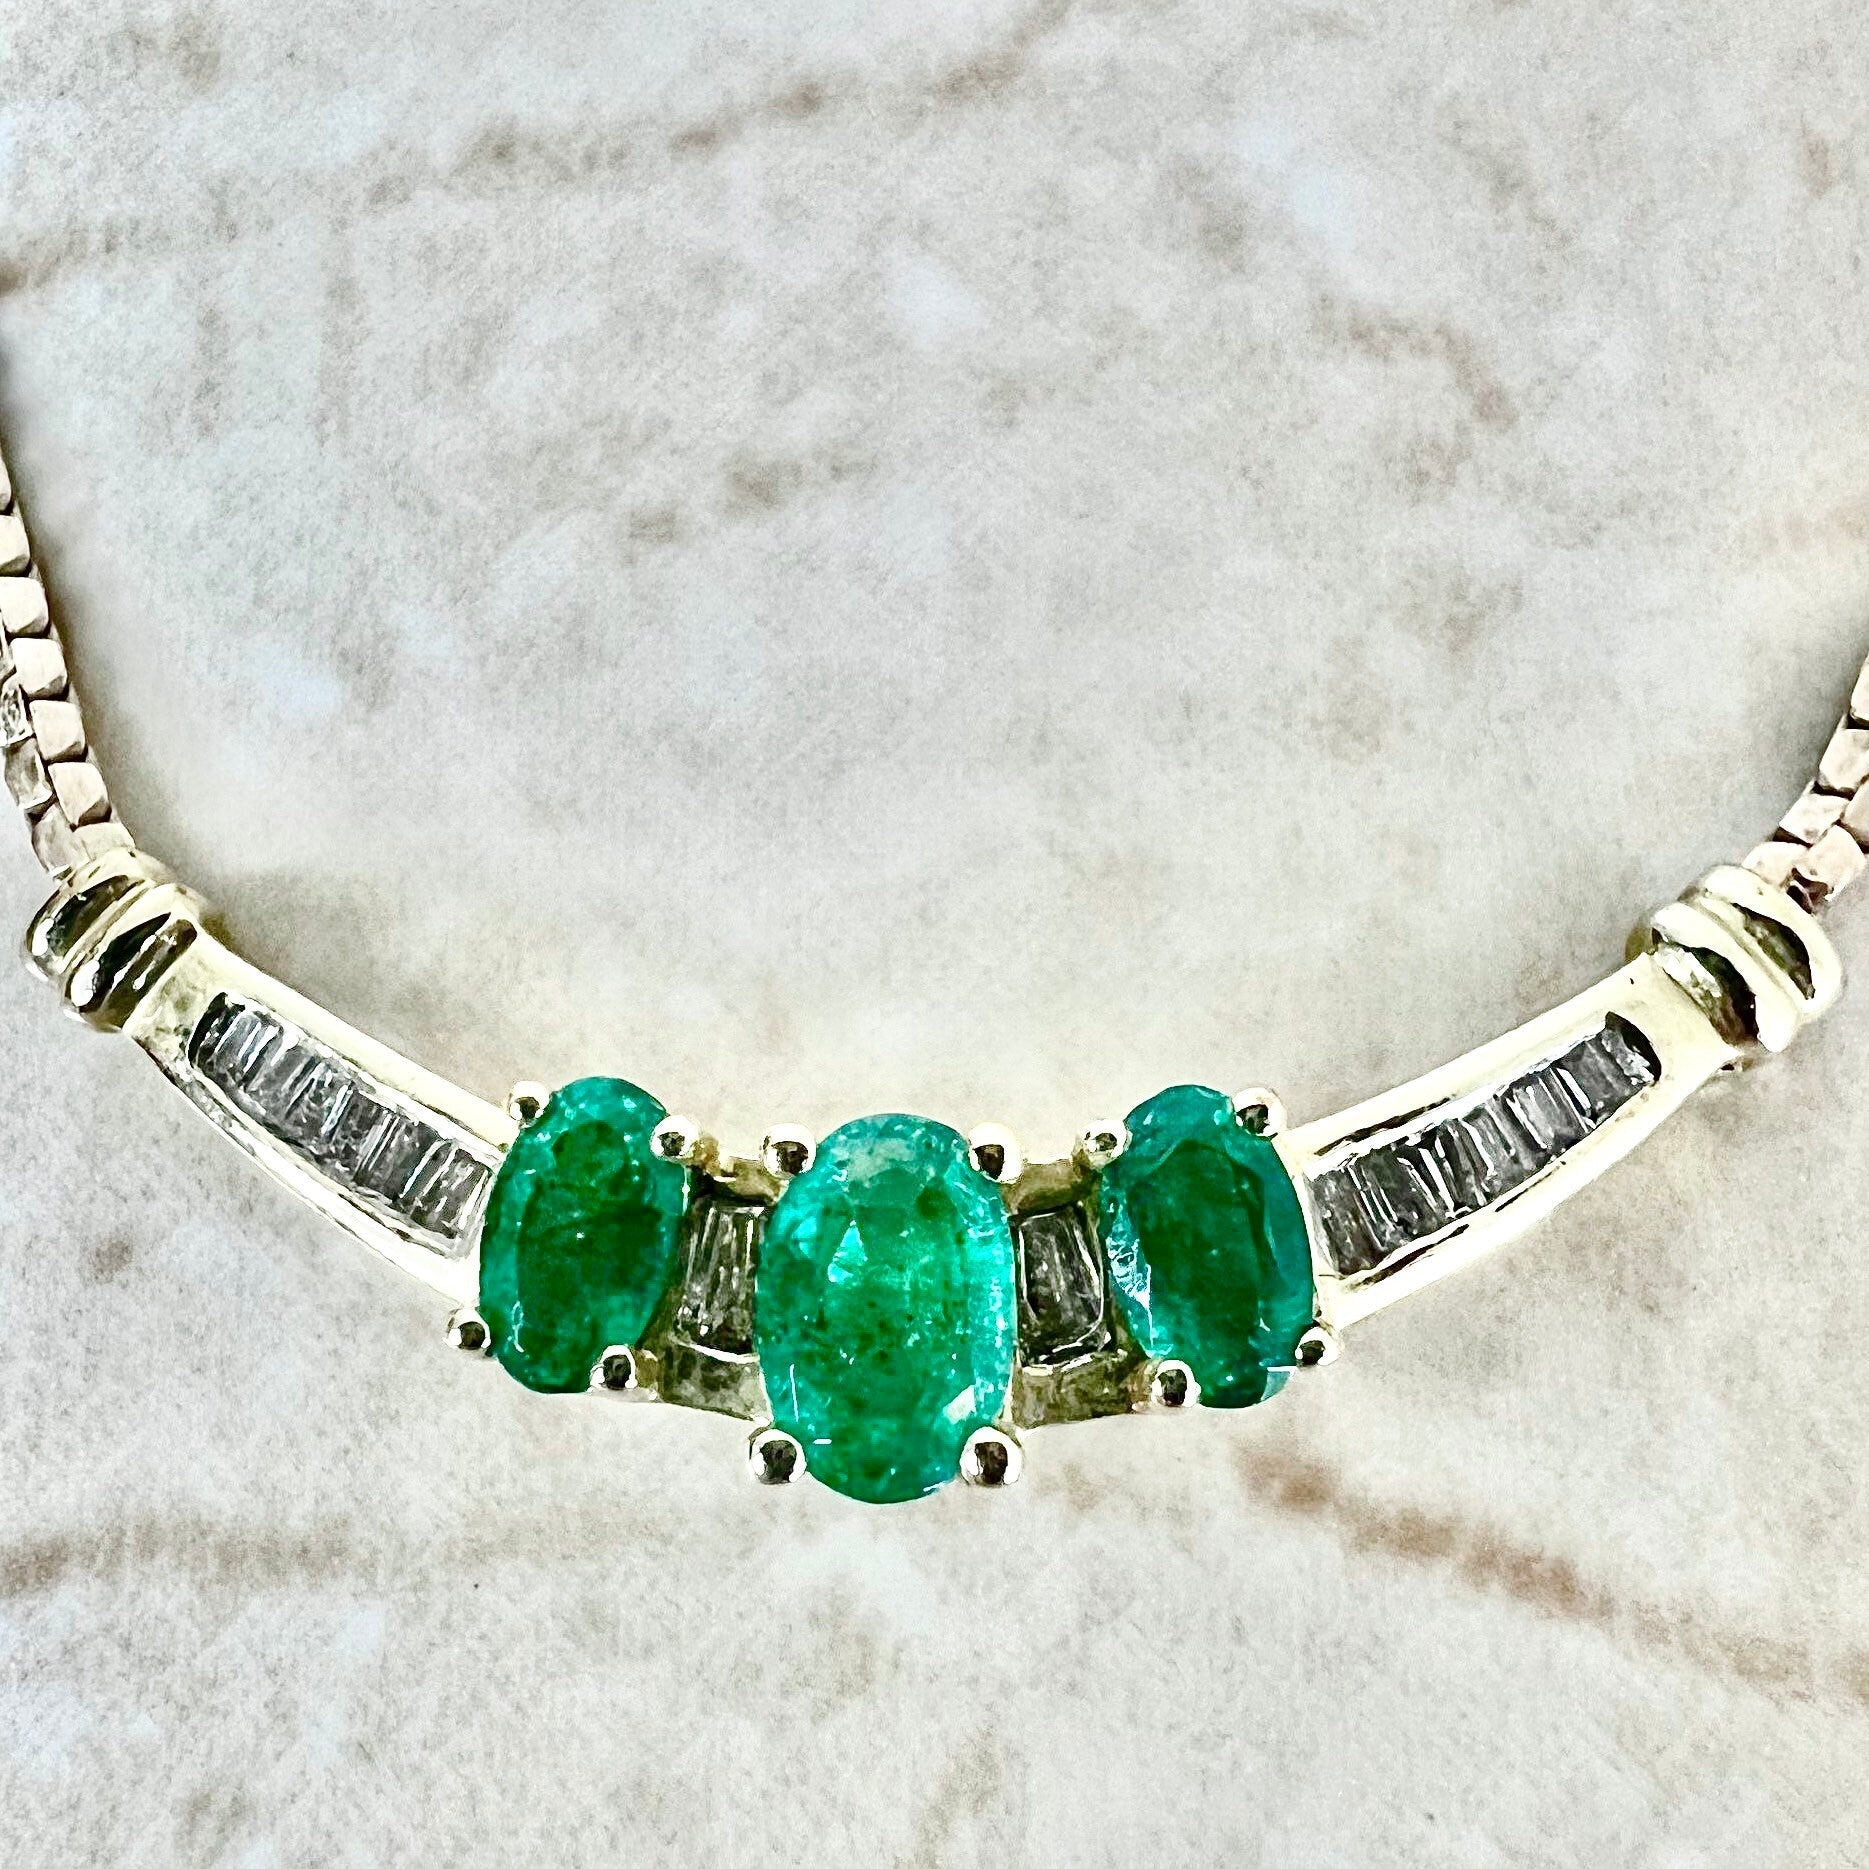 10K Vintage Italian Emerald And Diamond Necklace - 10 Karat Yellow Gold Emerald Pendant - Natural Emerald Necklace - May Birthstone